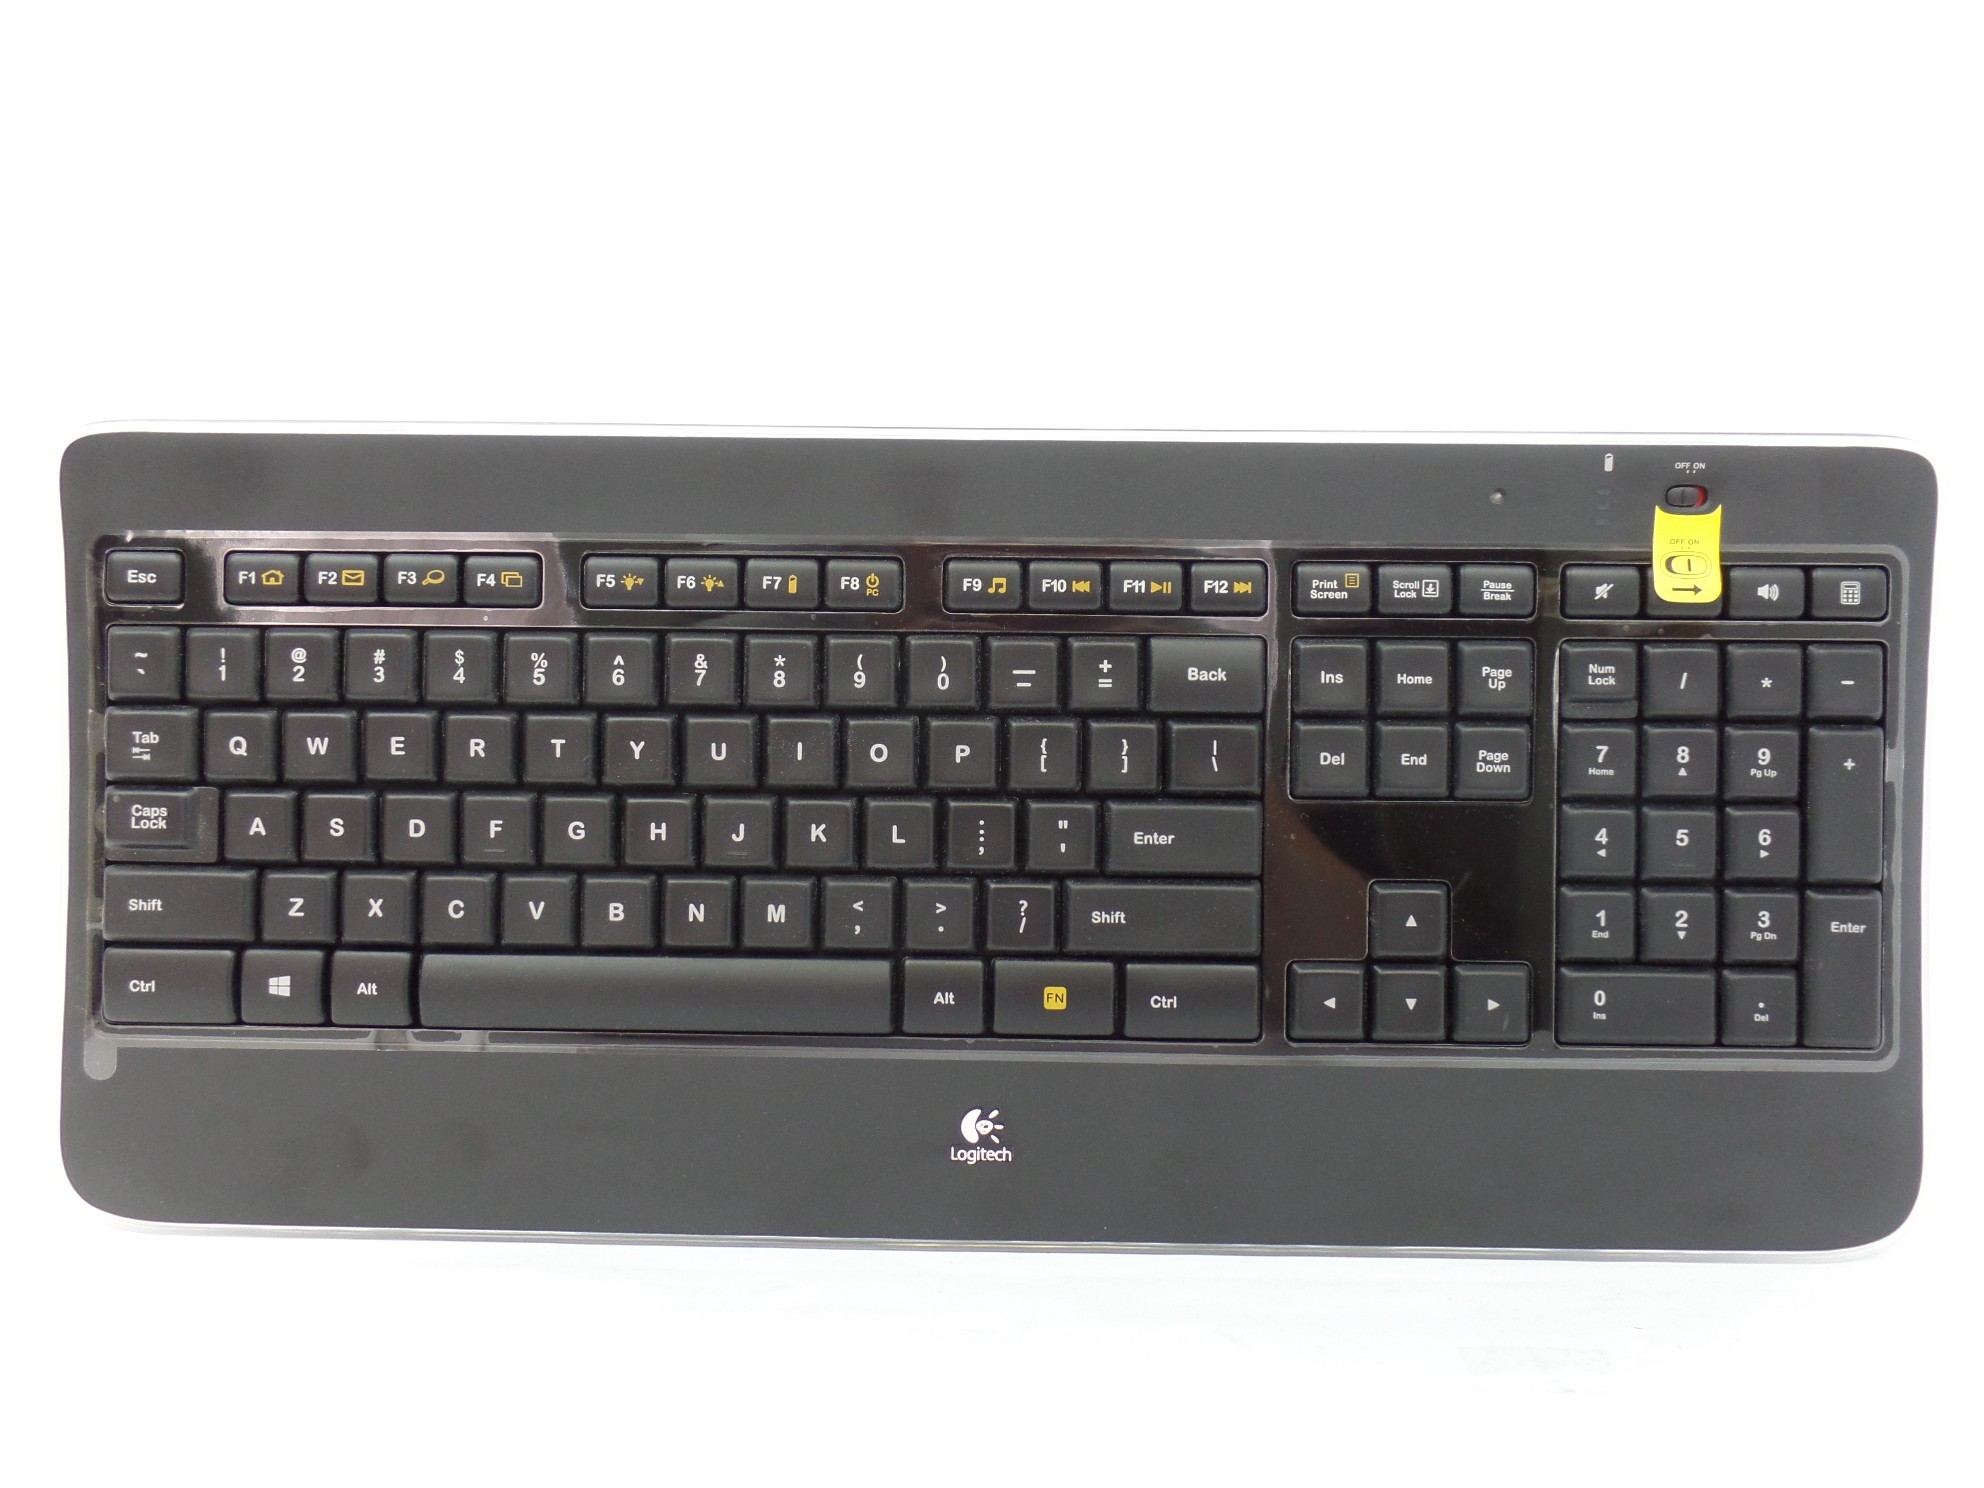 Logitech K800 Wireless Slim Illuminated Keyboard 2.4GHz - no unified receiver